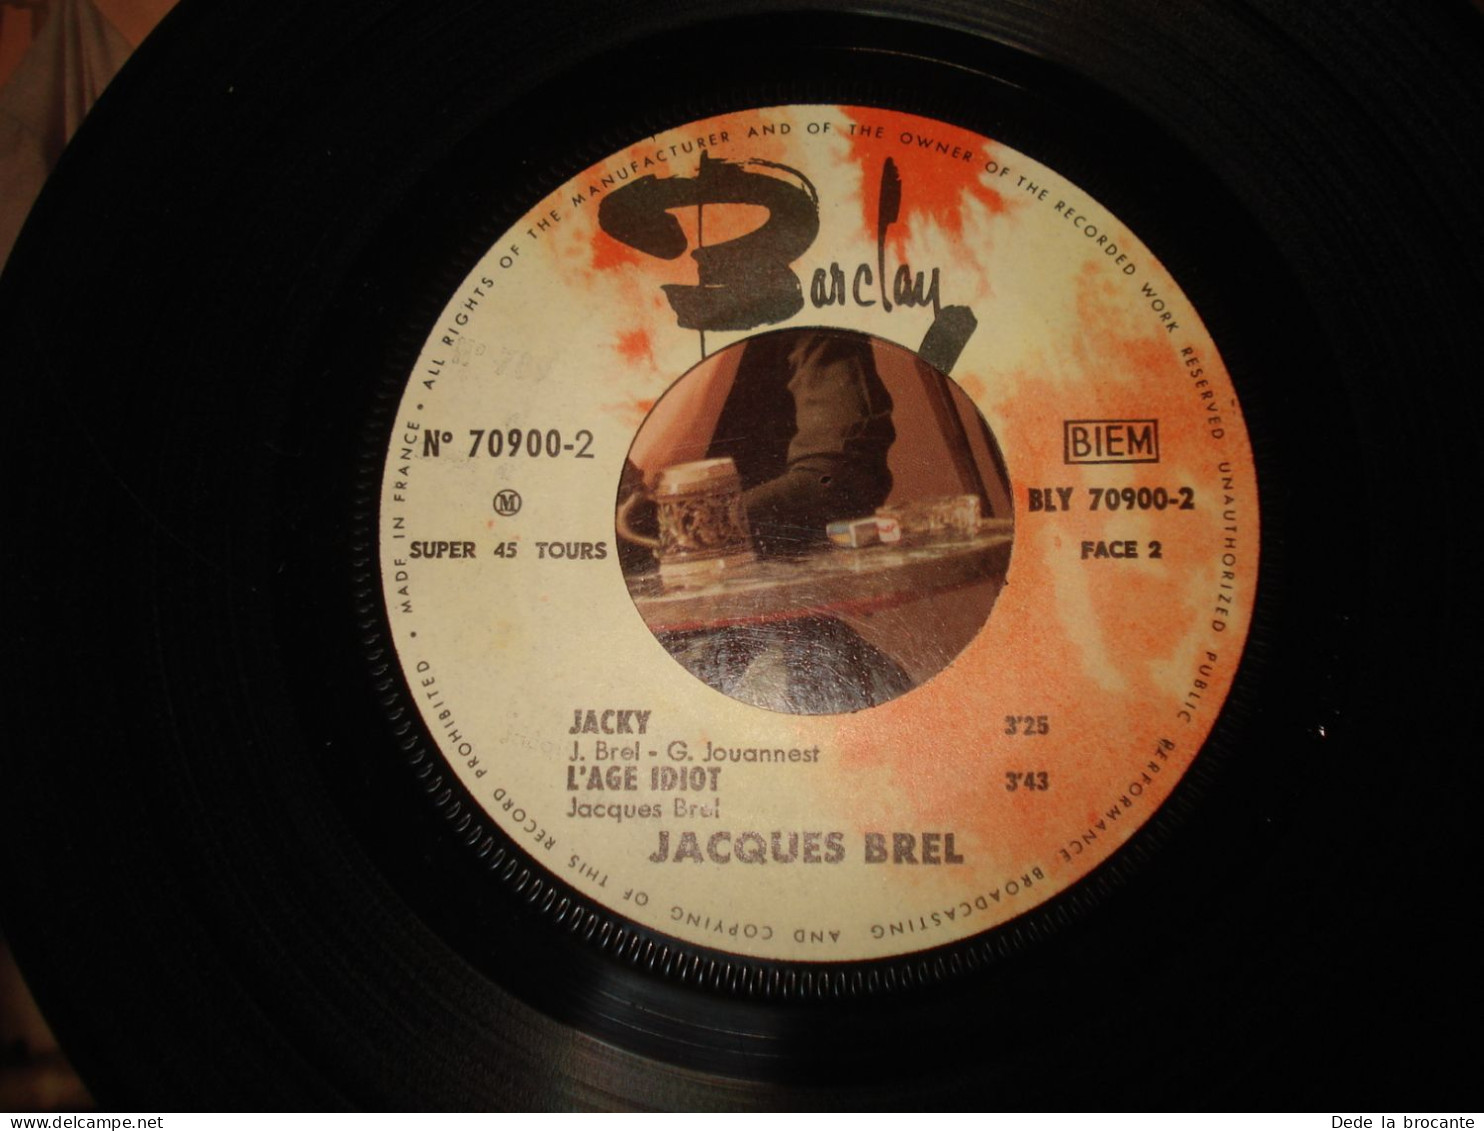 B13 / Jacques Brel – Ces Gens Là - EP – Barclay – 70 900 M - Fr 1965  NM/NM - Formatos Especiales